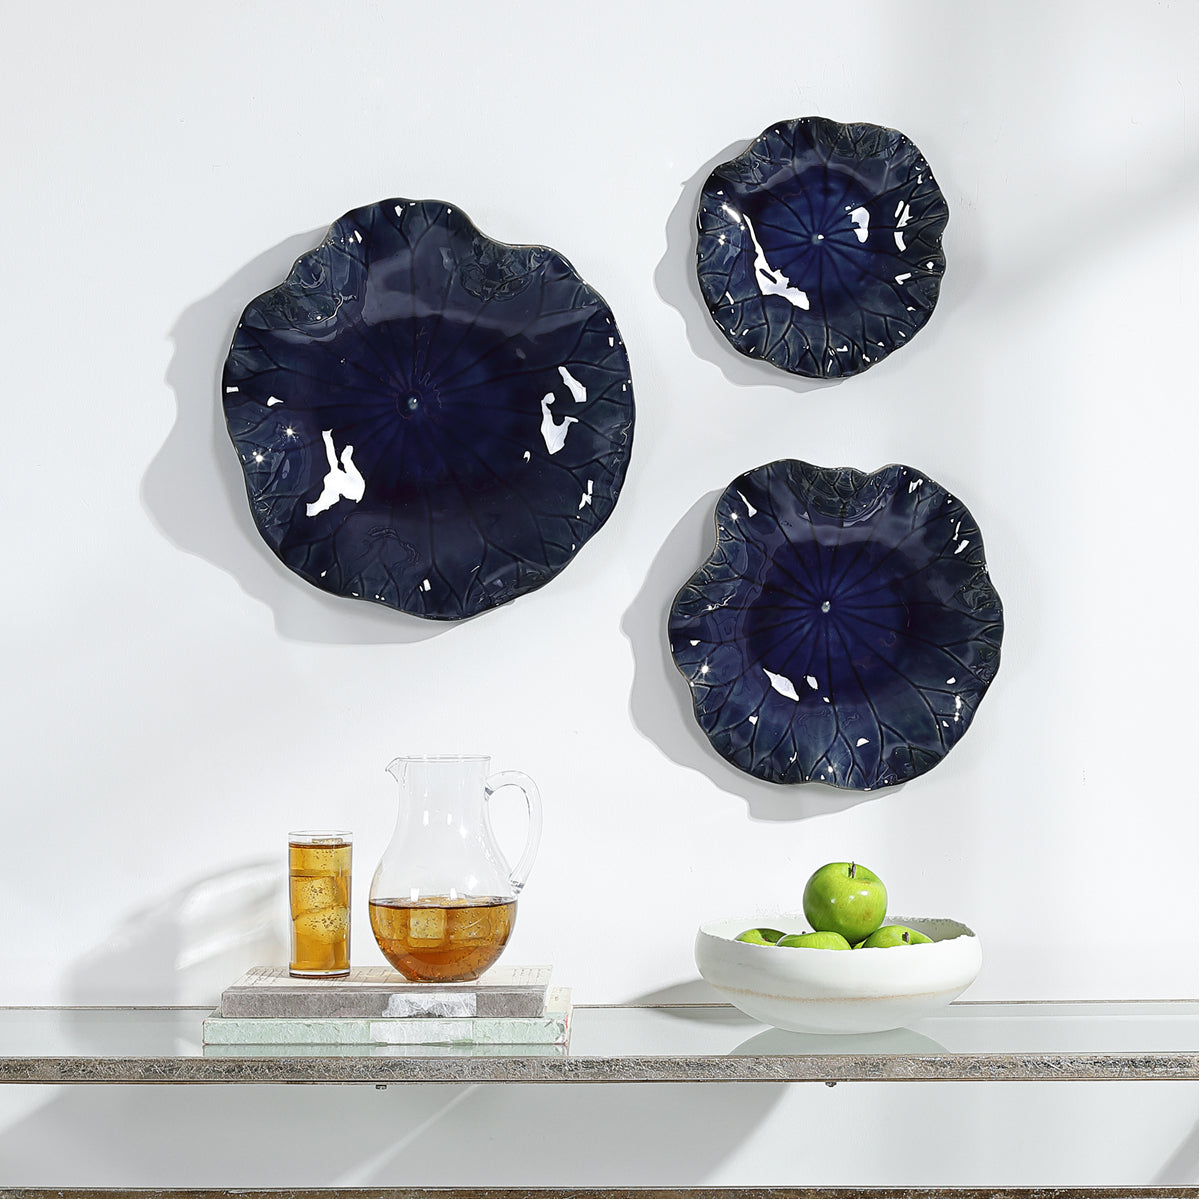 Uttermost Abella Blue Ceramic Wall Decor, 3-Piece Set